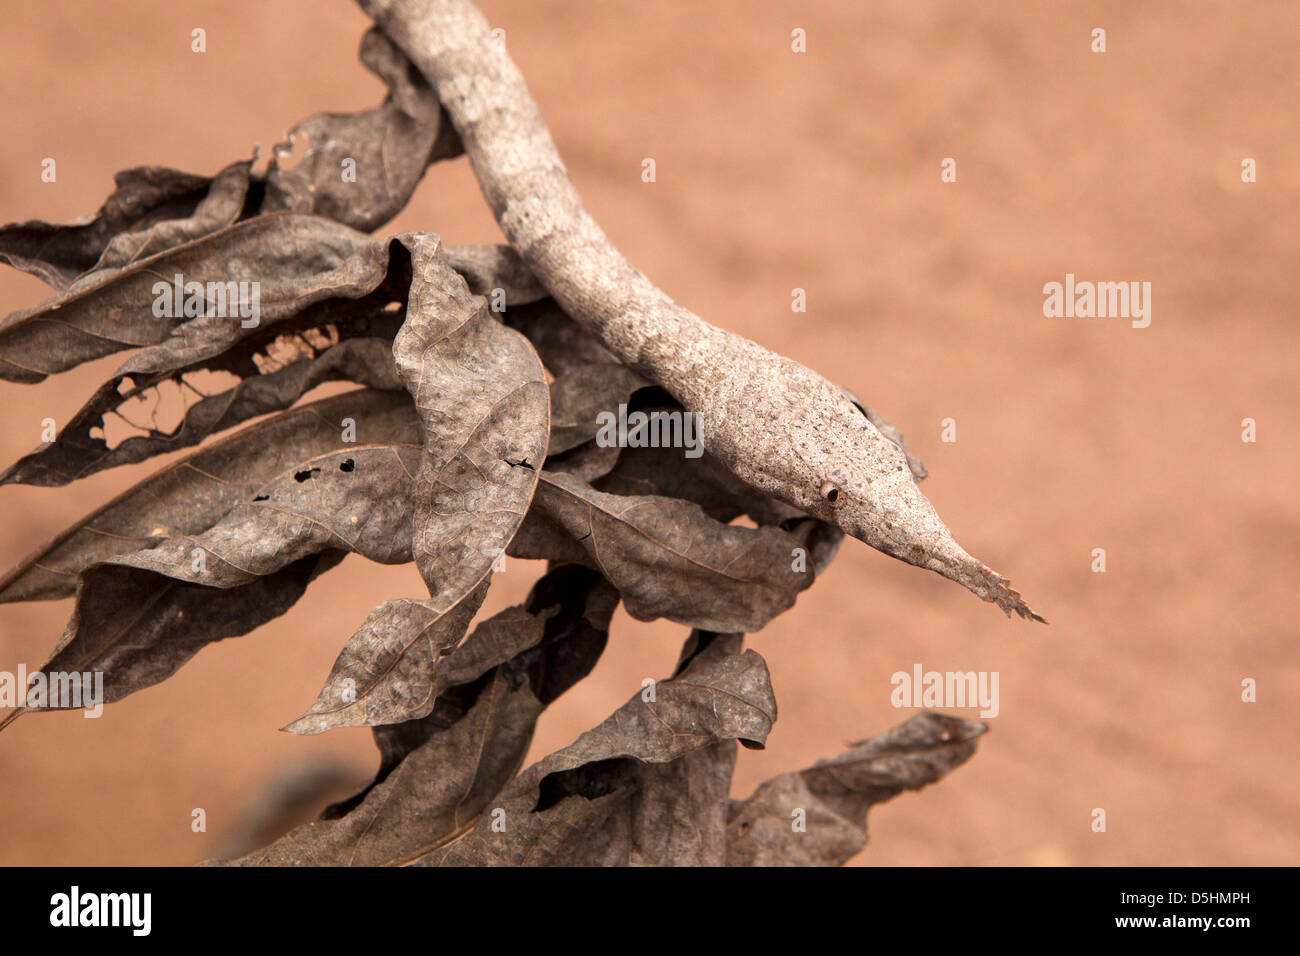 Madagascar, Operation Wallacea, Mariarano, Leaf mimic snake Stock Photo